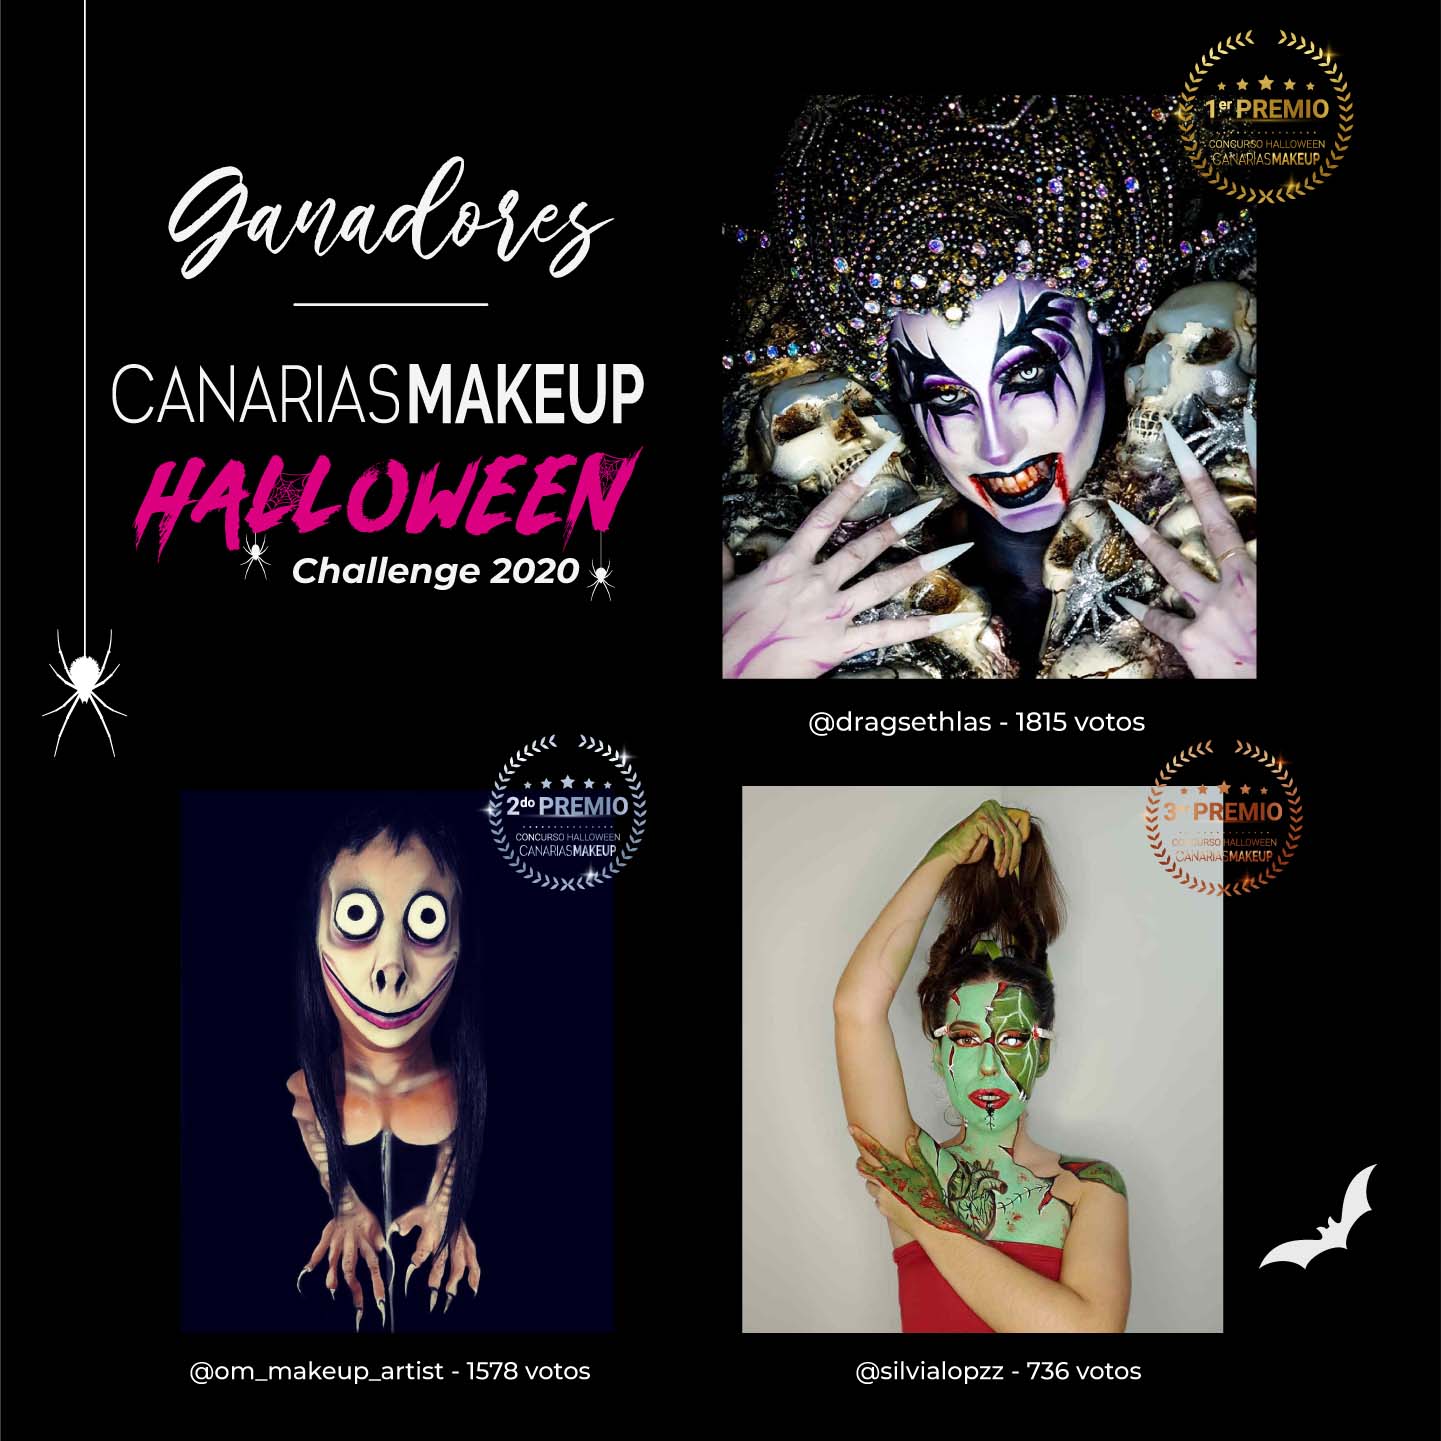 Canarias Makeup | Concurso de Maquillaje Halloween Challenge 2020